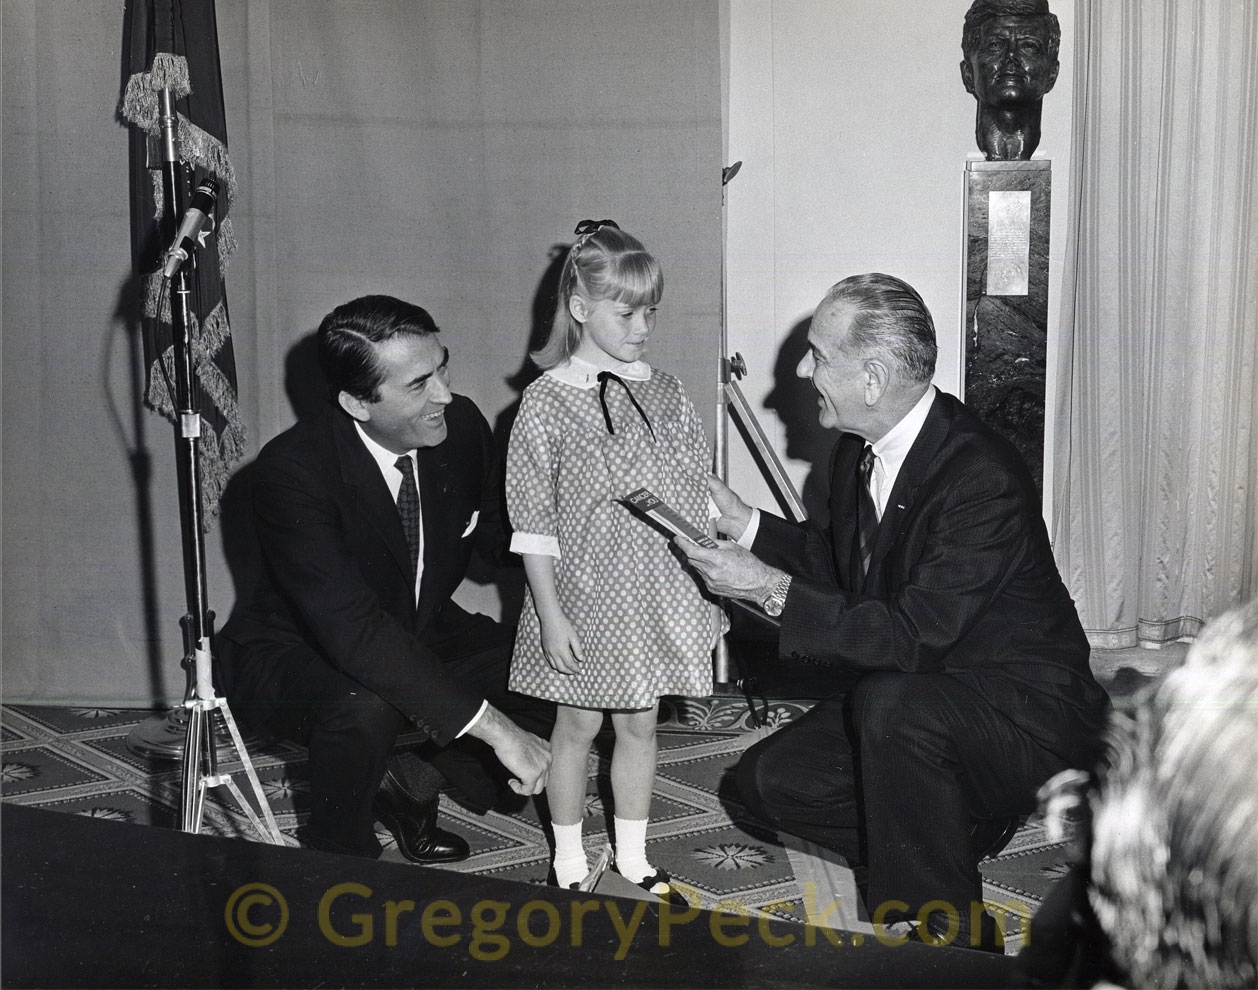 With Lyndon B. Johnson